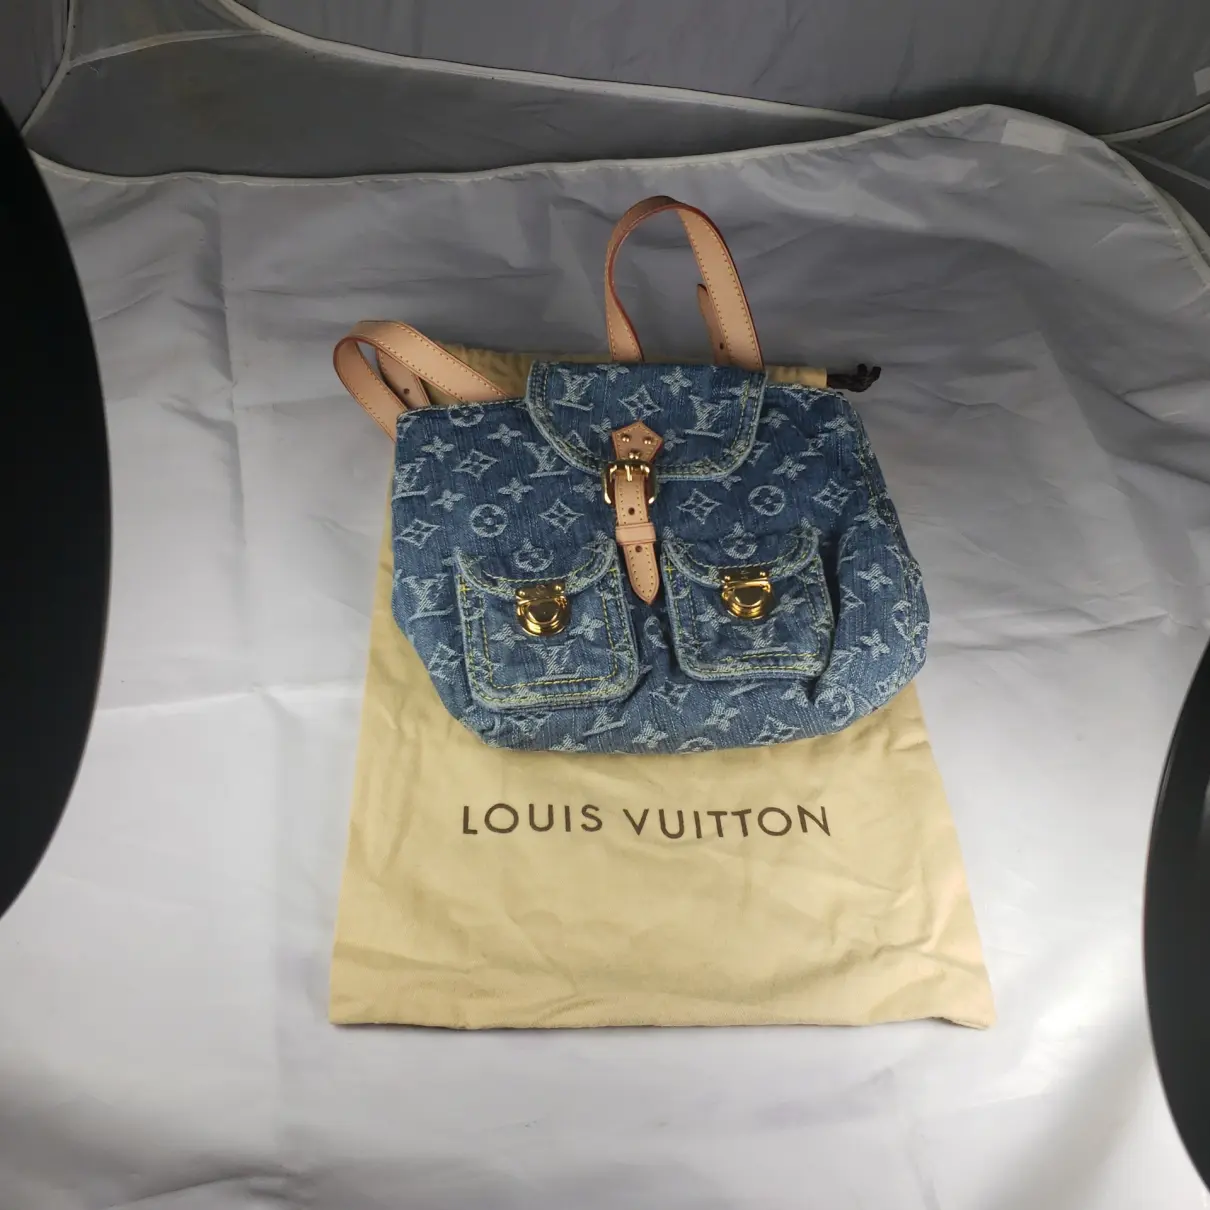 Buy Louis Vuitton Backpack online